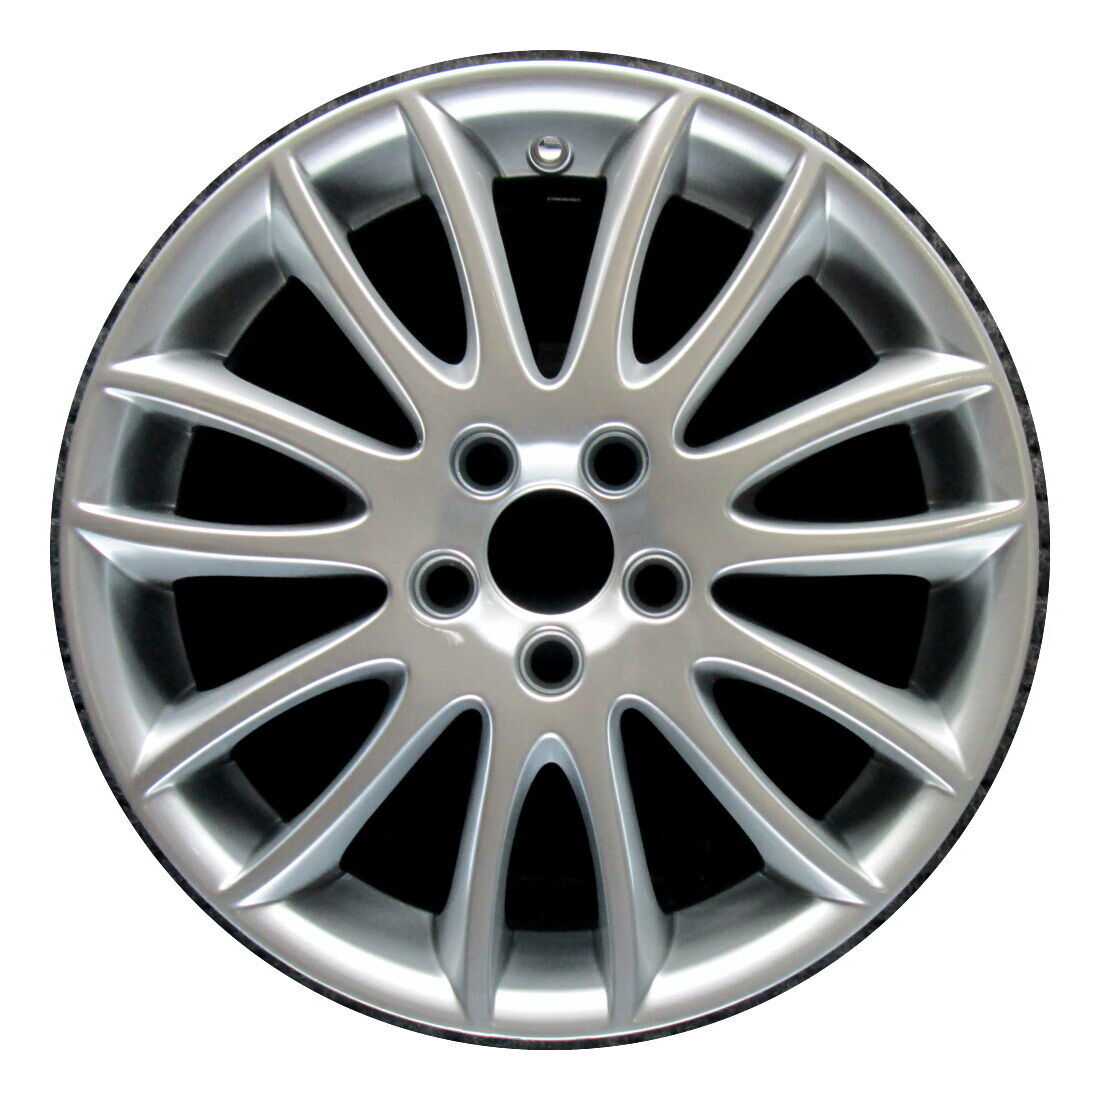 Wheel Rim Volvo C70 S70 17 2006-2010 312009954 306337866 OEM Factory OE 70296